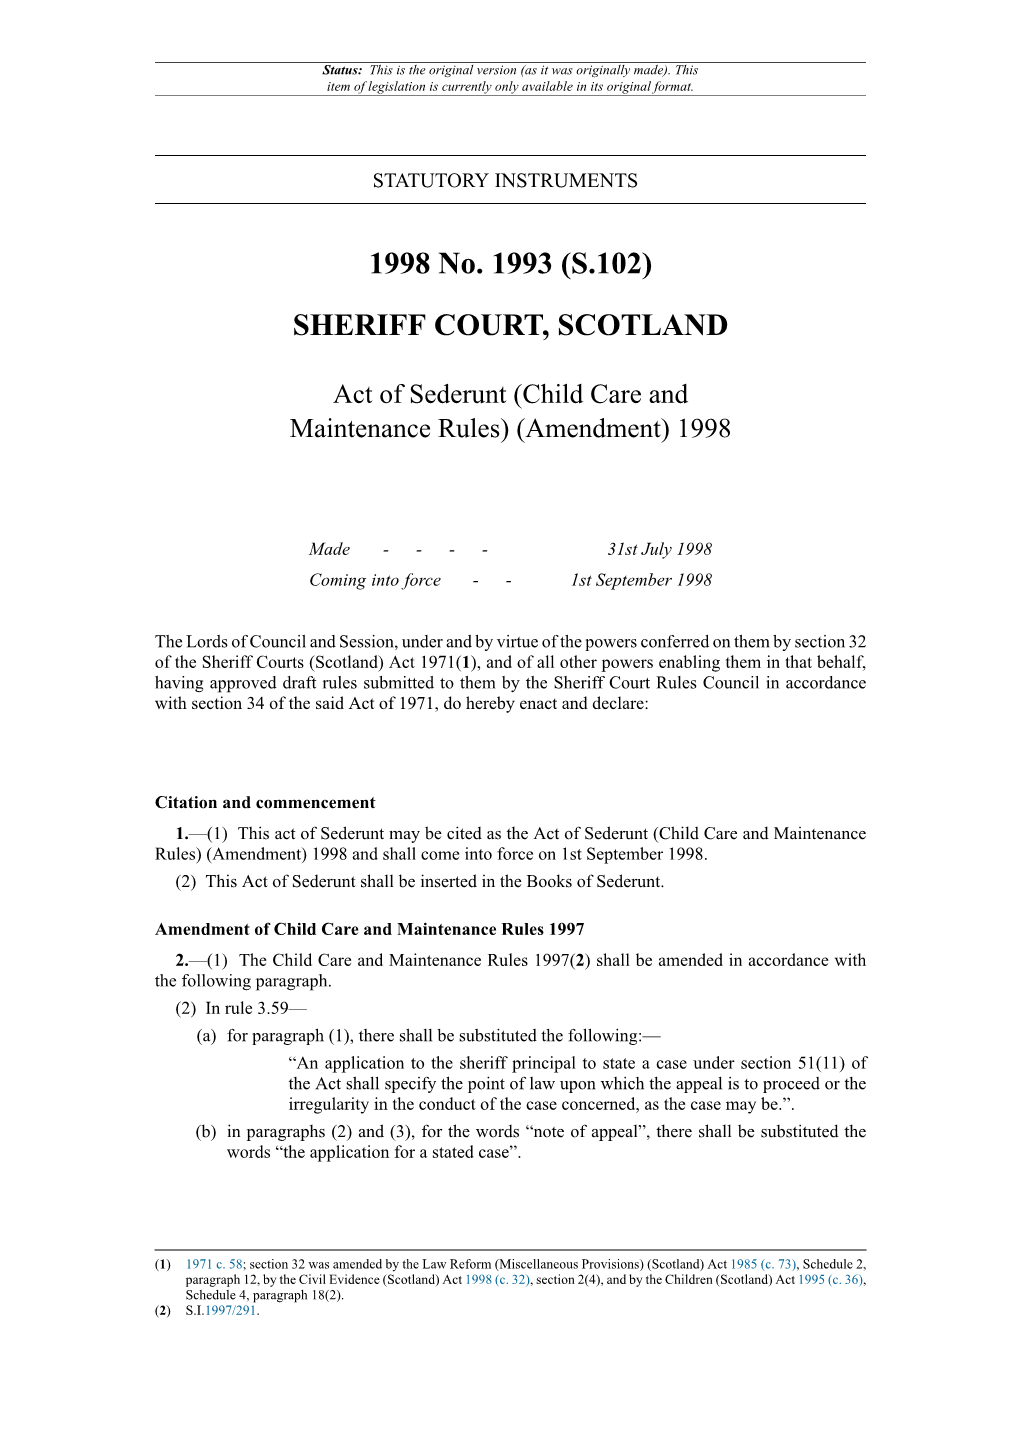 (Child Care and Maintenance Rules) (Amendment) 1998